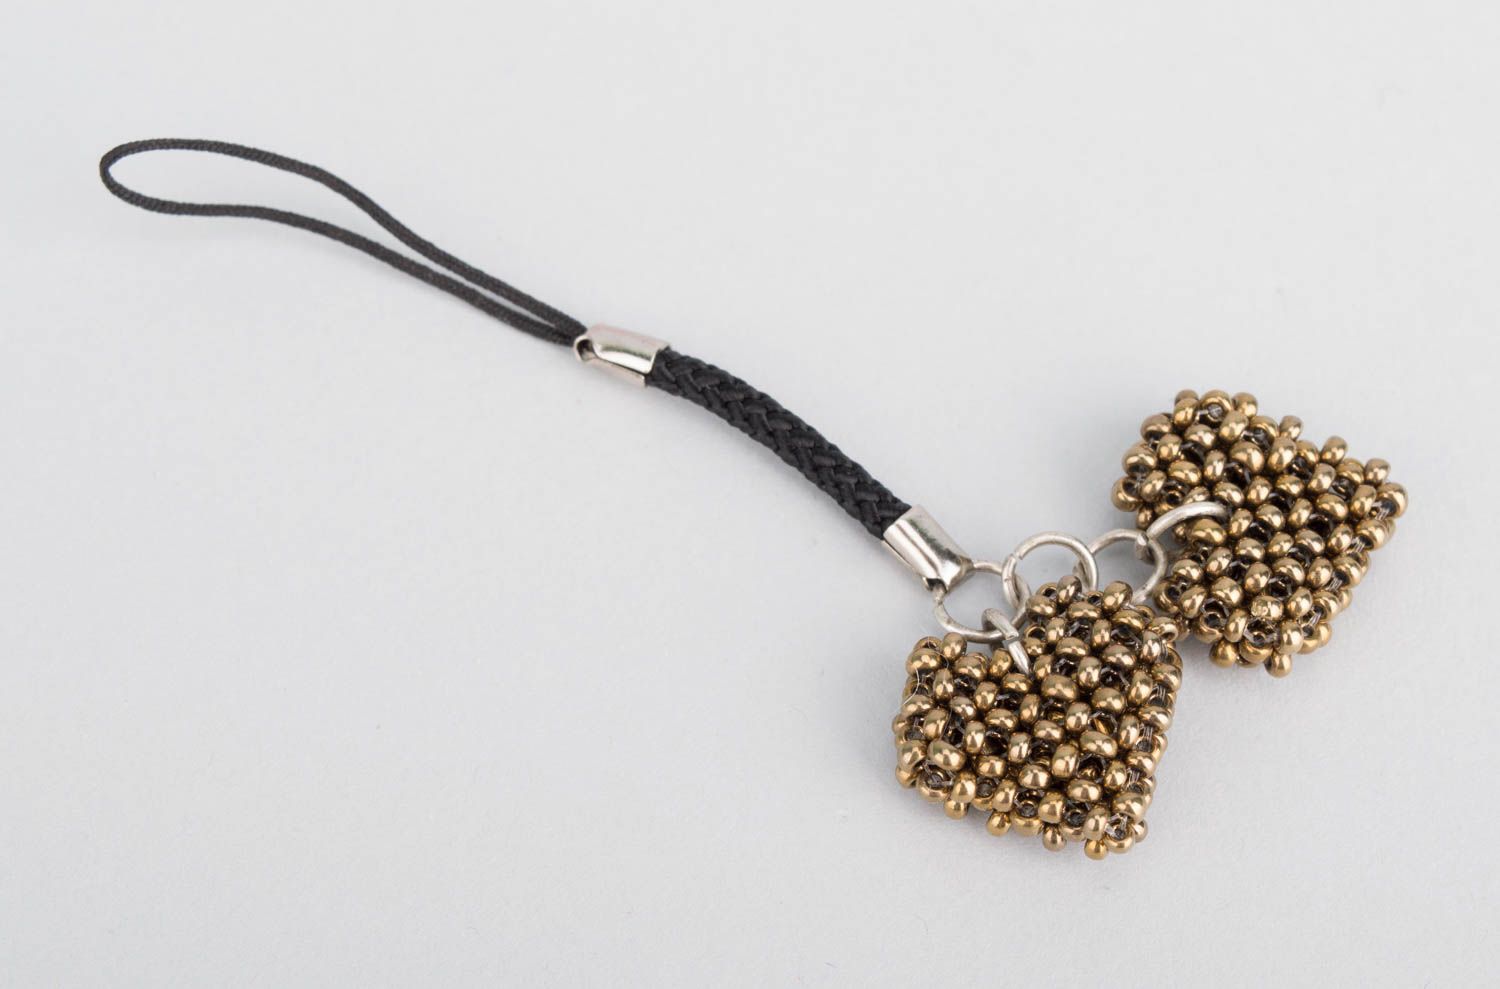 Handmade key ring designer keychains cell phone charm gift ideas for girls photo 3